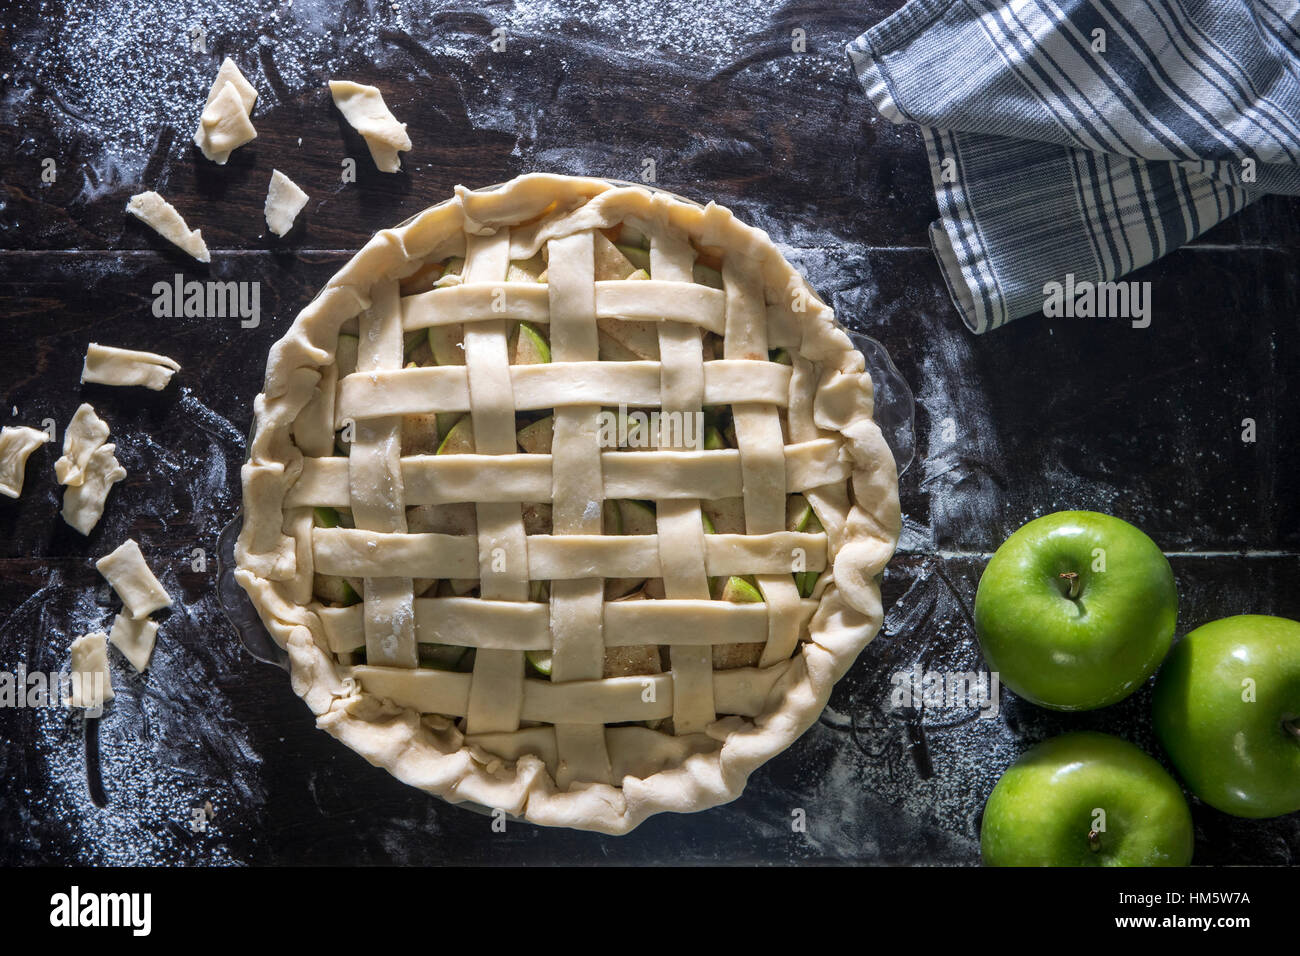 Green apple pie on wooden table Stock Photo